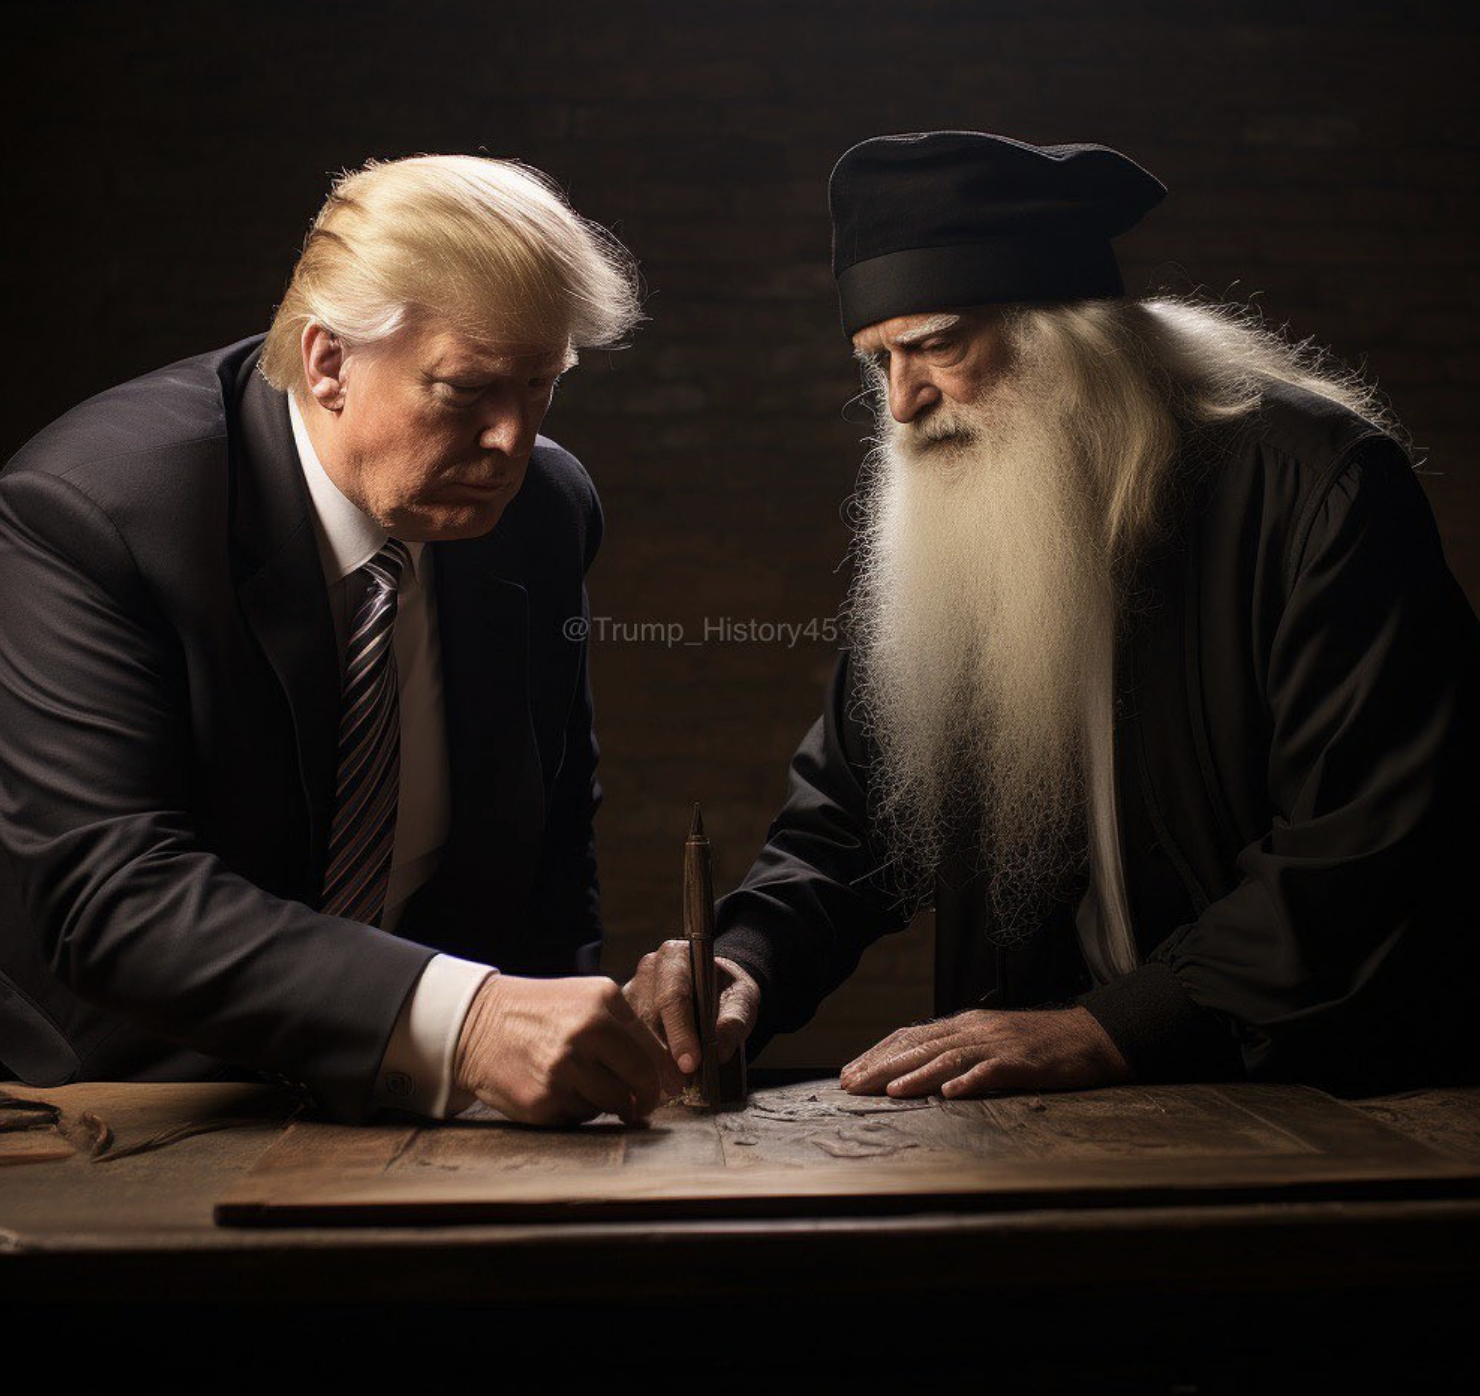 Trump creating art with Leonardo Da Vinci